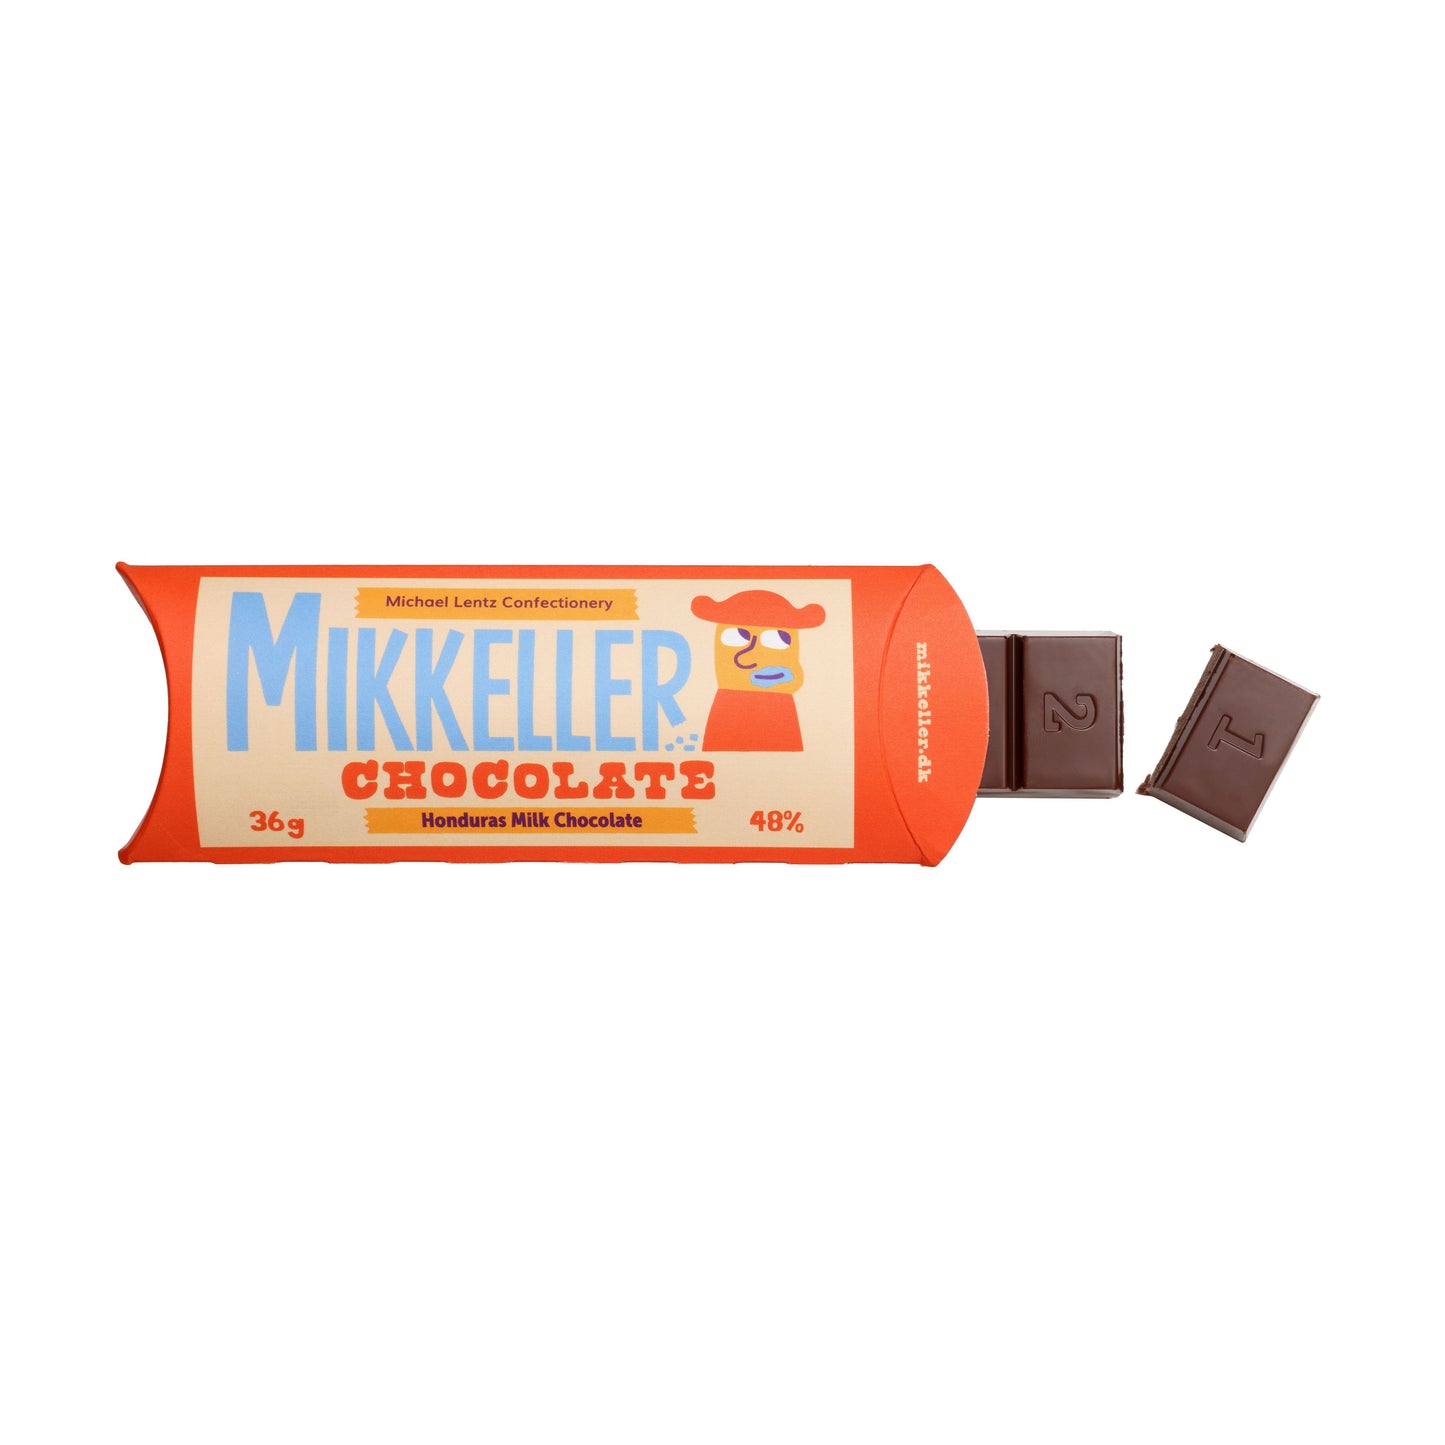 Mikkeller - Honduras Milk Chocolate 48%, small bar